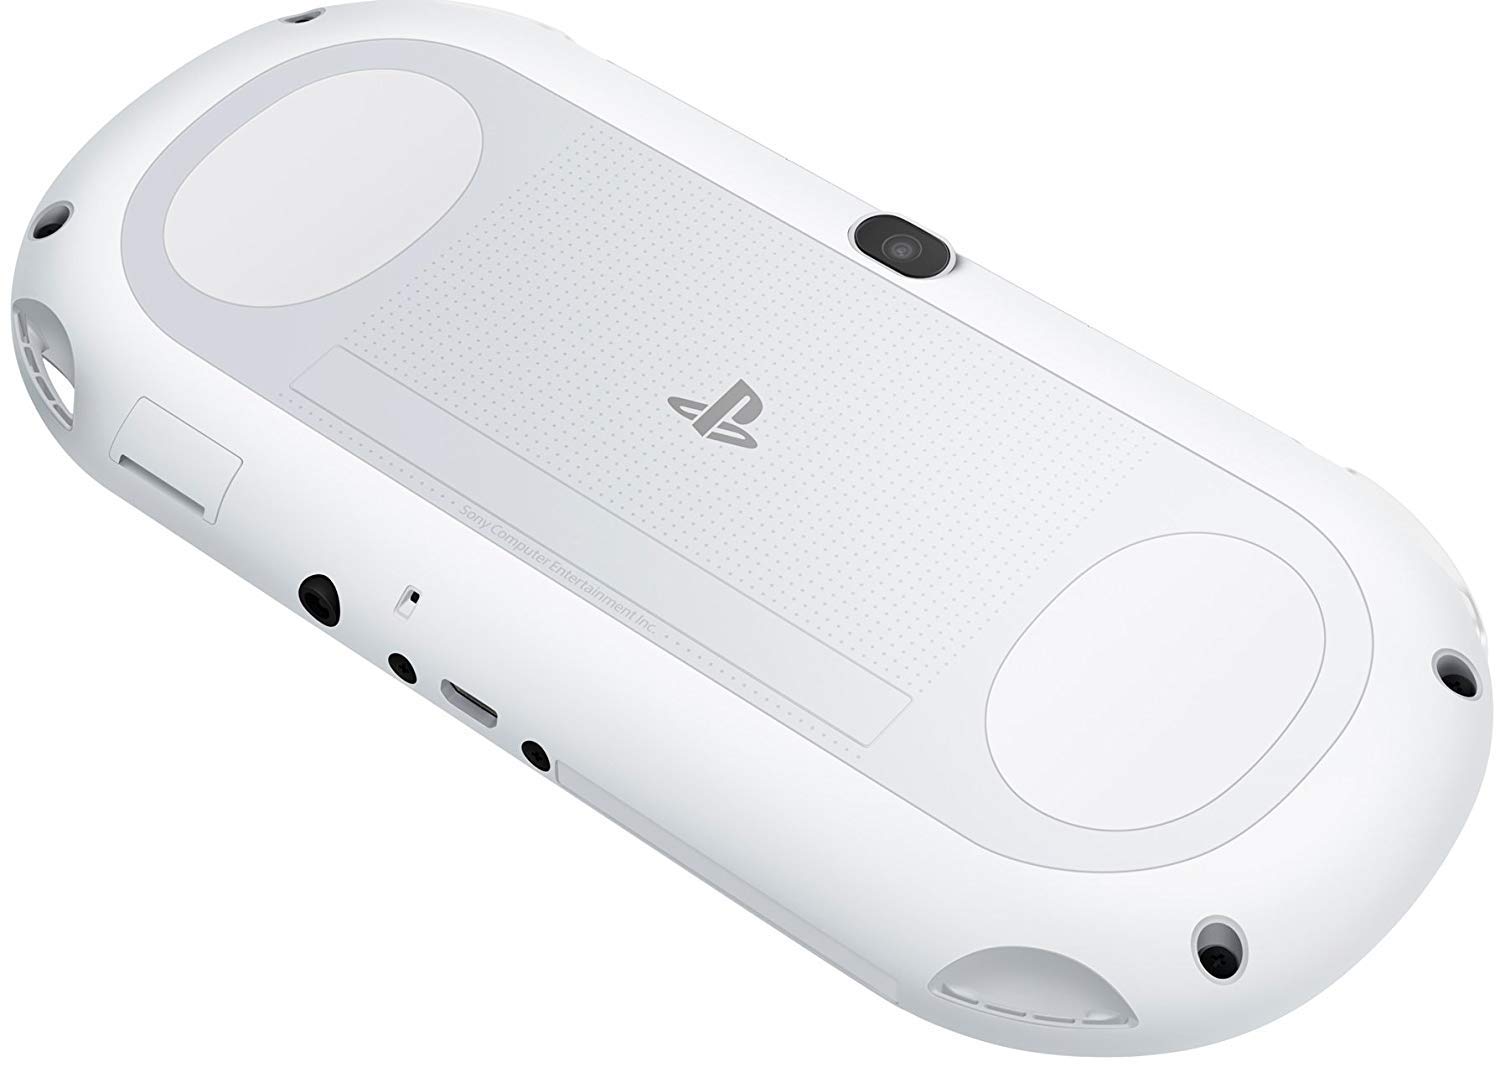 Sony Playstation Vita Wi-Fi 2000 Series Slim (Crystal White)(Renewed)